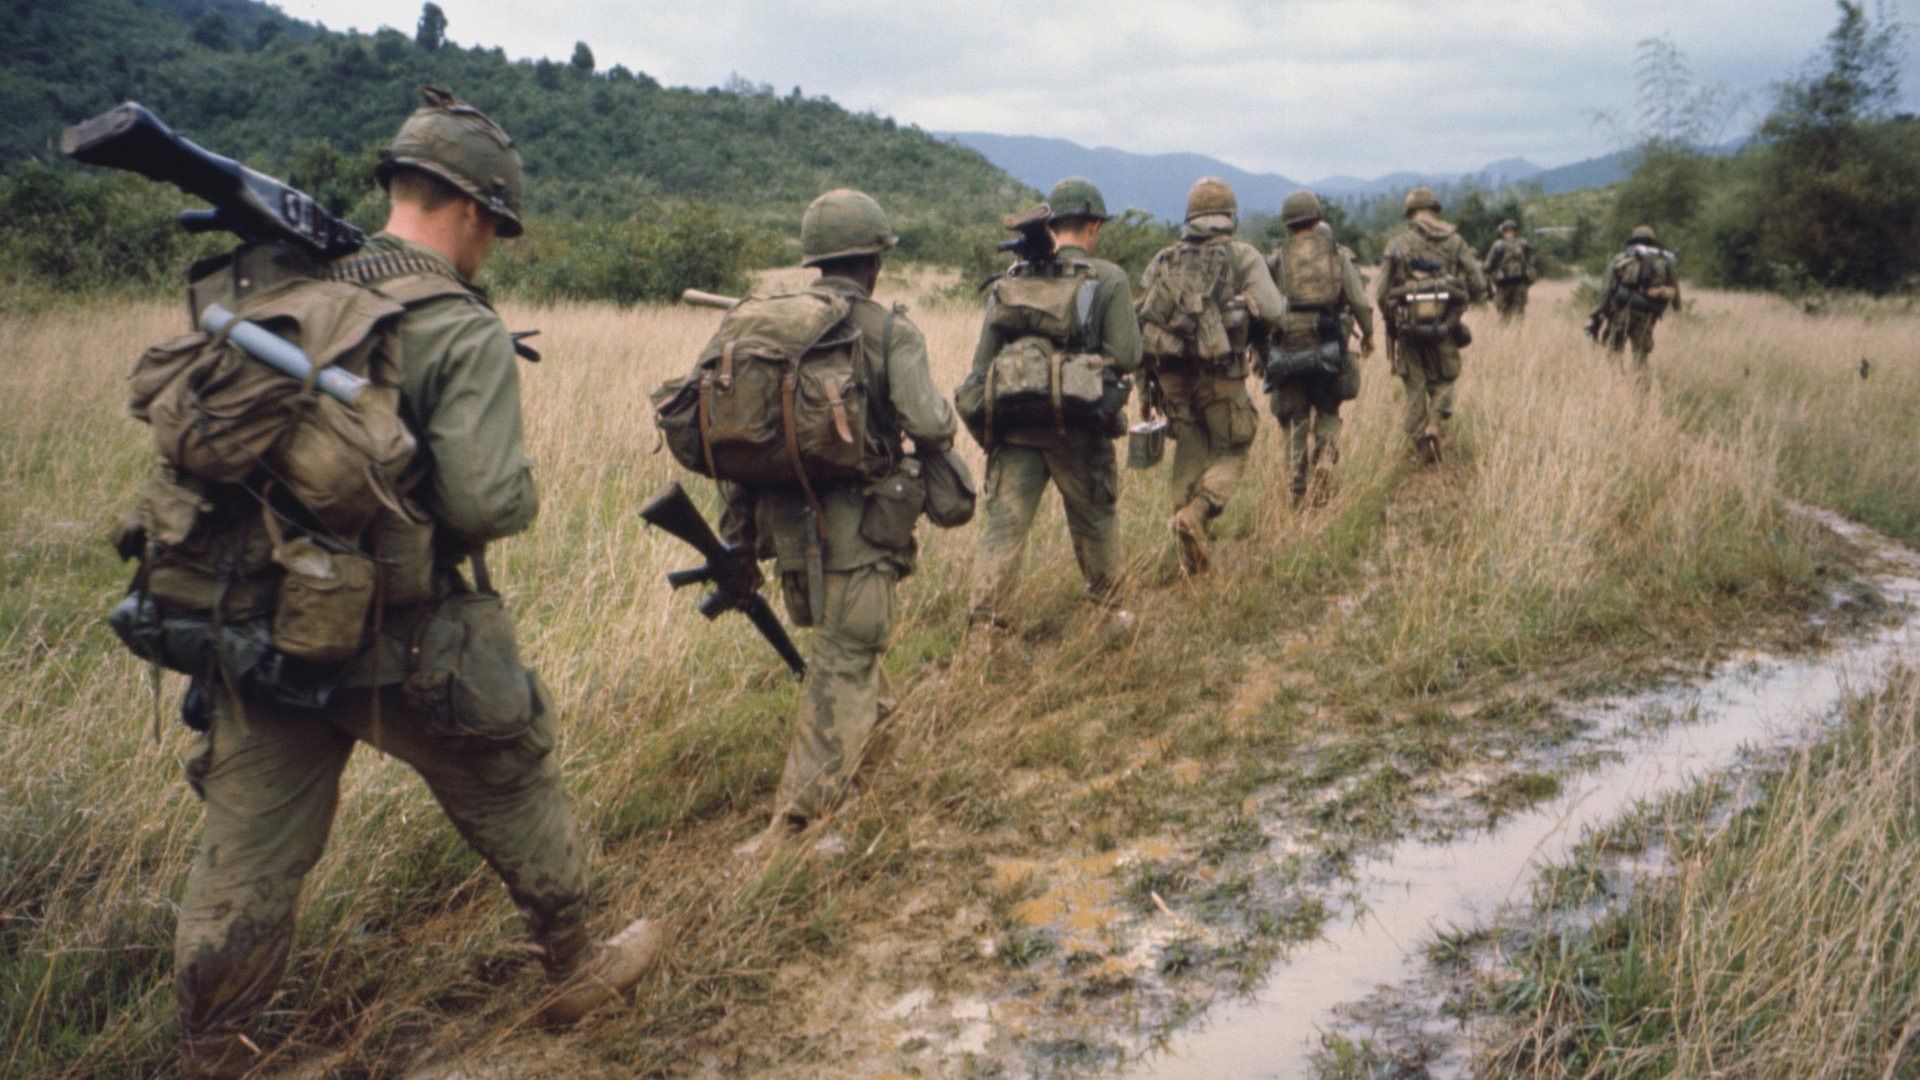 The Vietnam War Backdrop